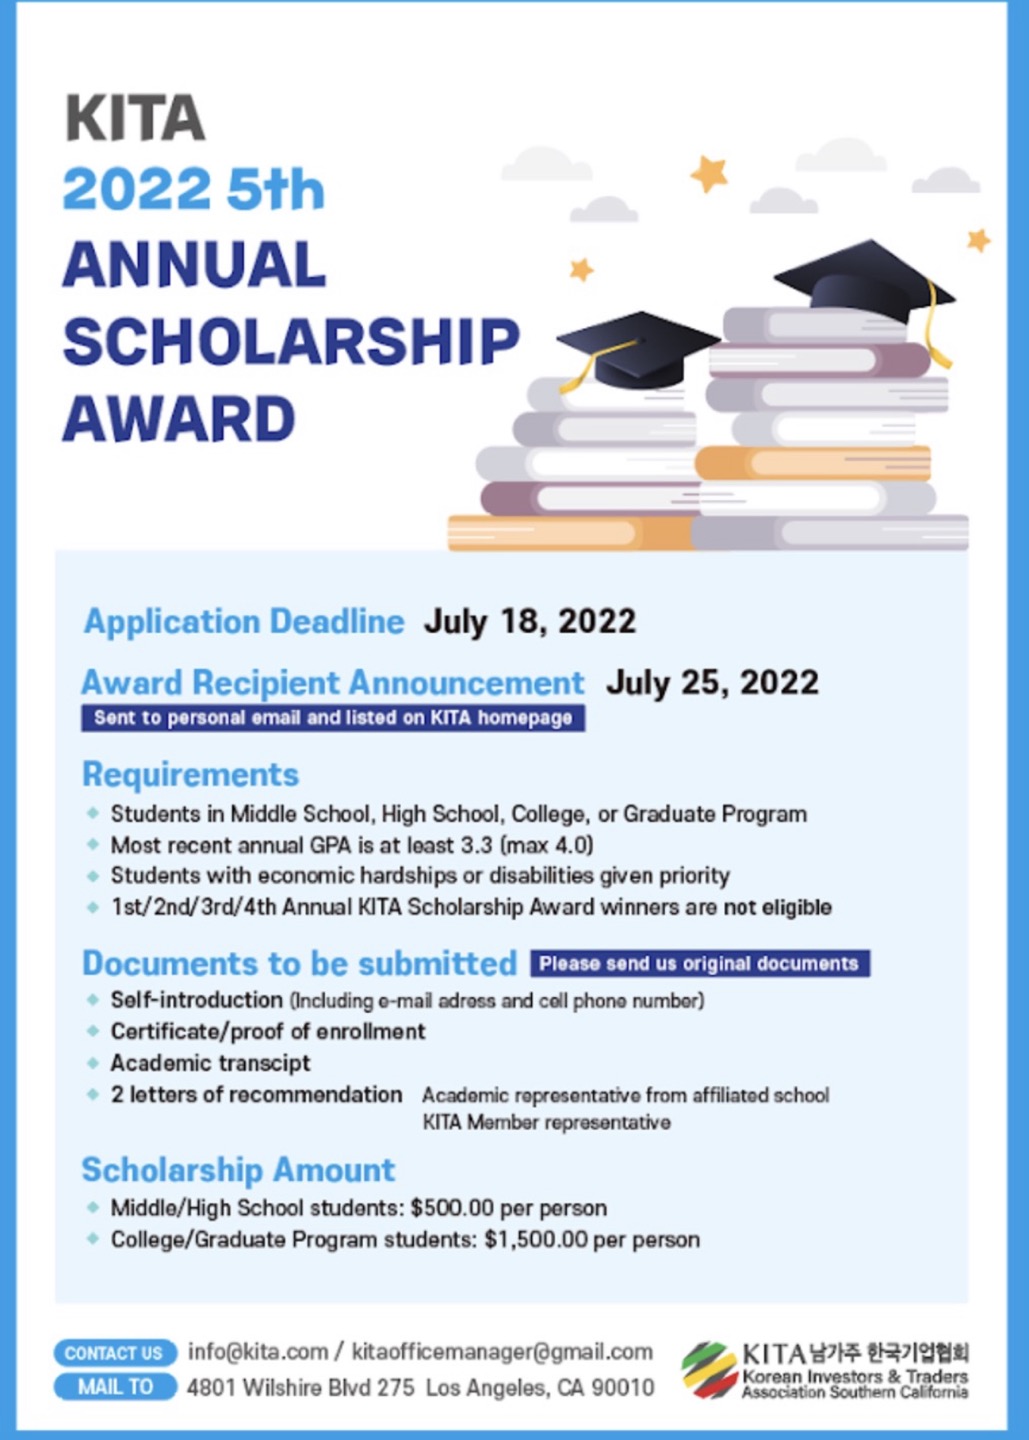 KITA 2022 5th Annual Scholarship Award